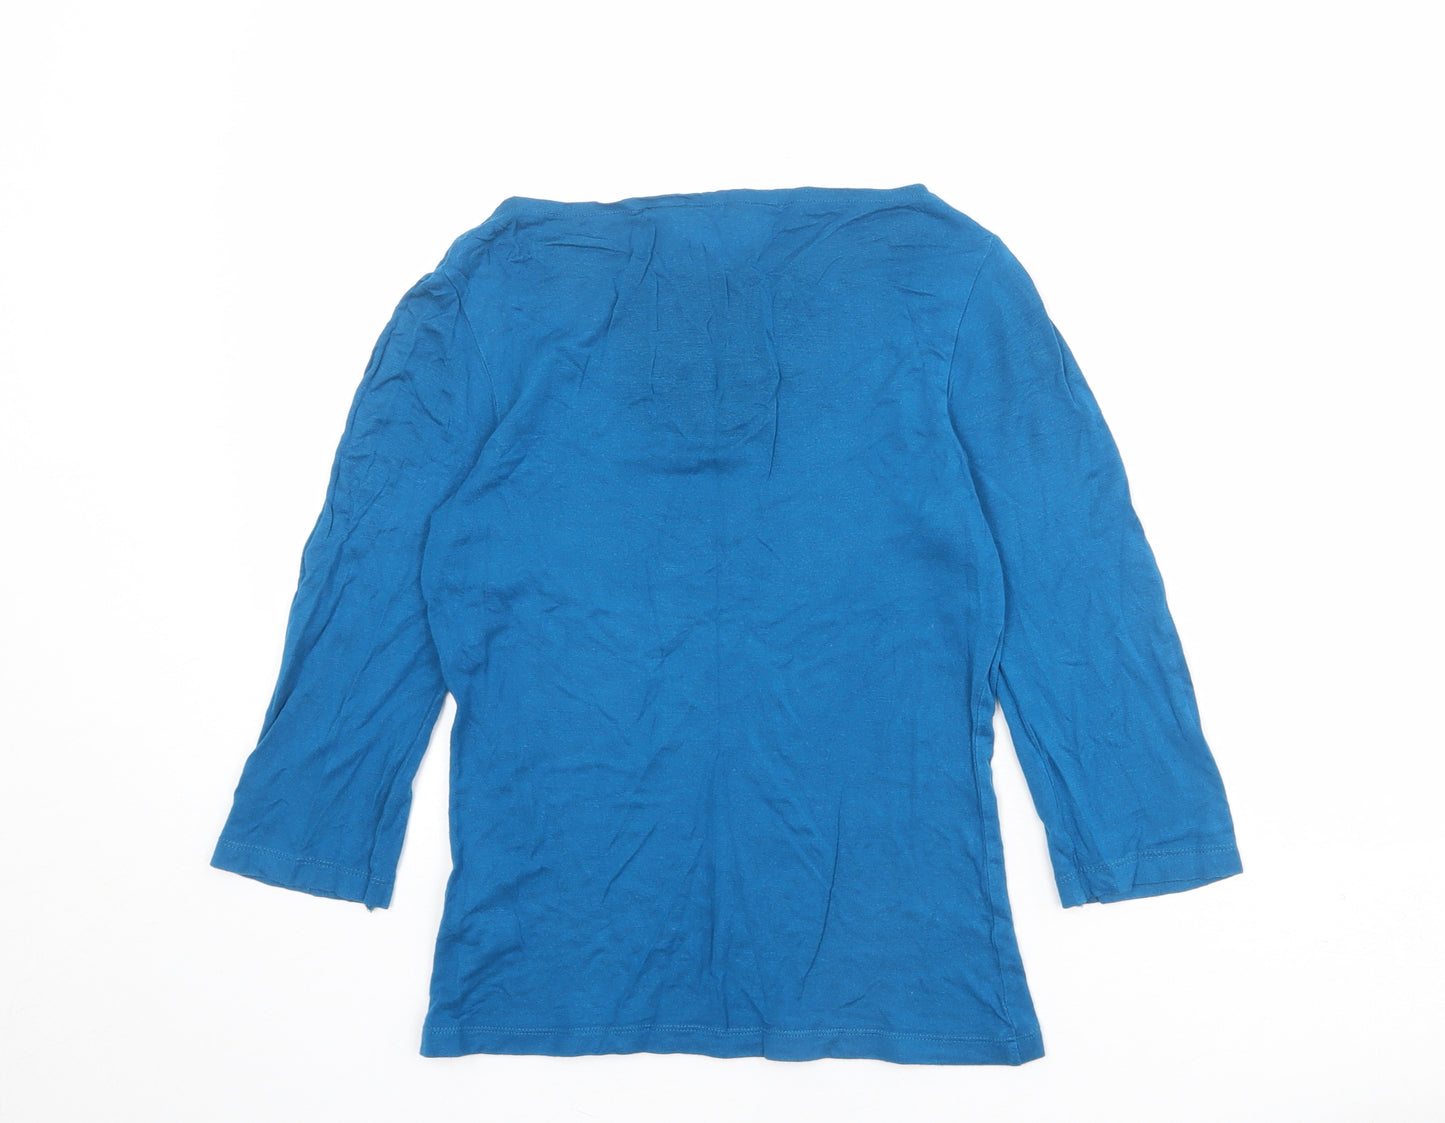 Dorothy Perkins Womens Blue Viscose Basic Blouse Size 10 Boat Neck